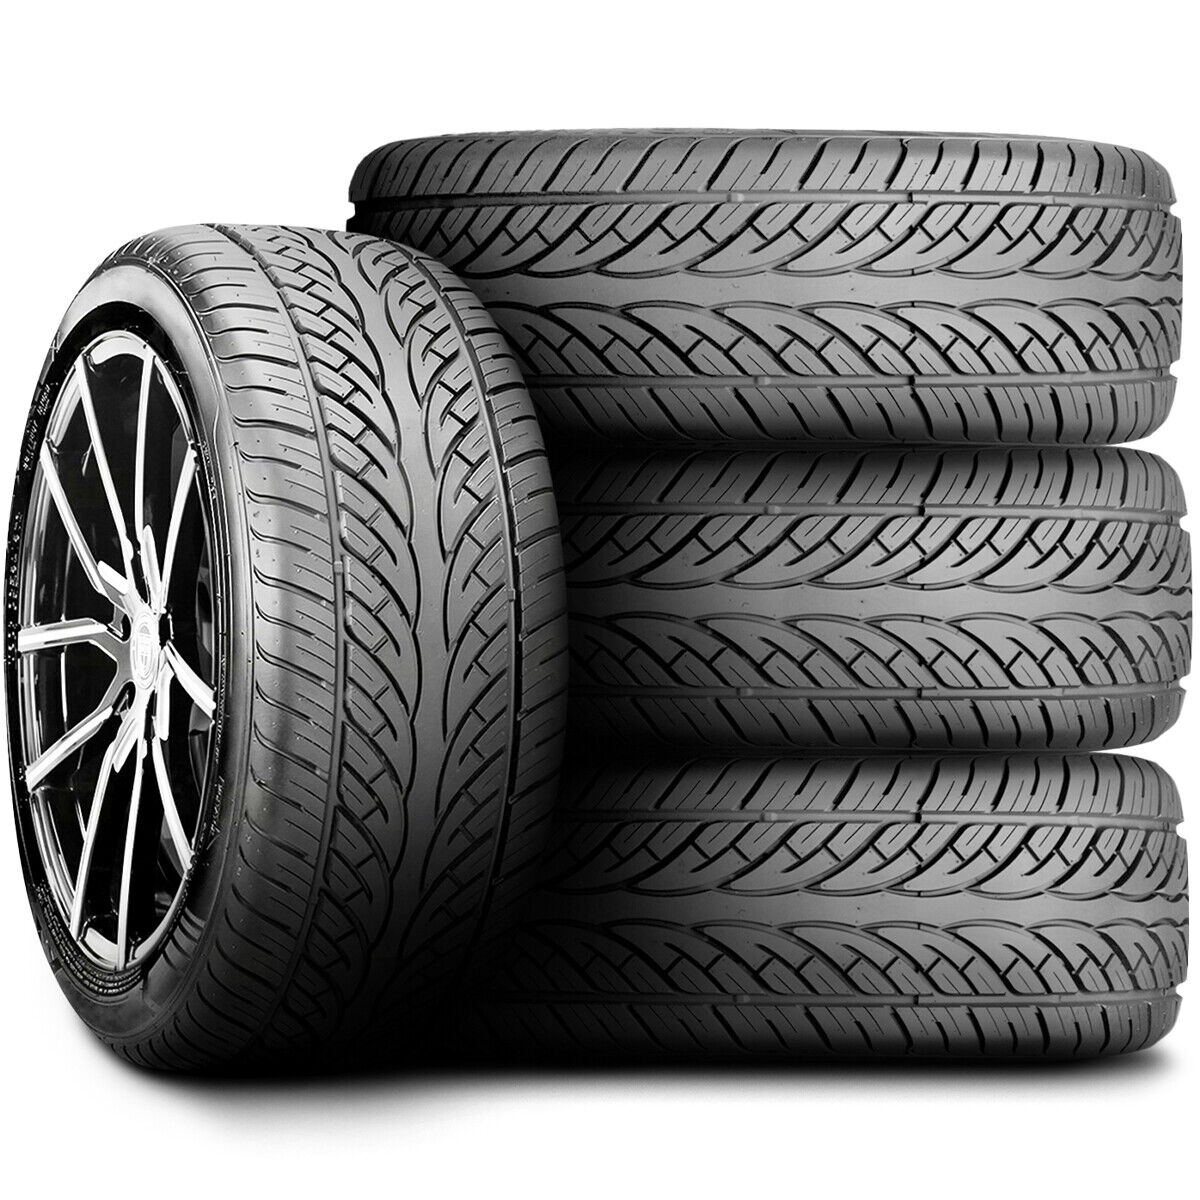 4 Tires Sunny SN3870 275/30ZR24 275/30R24 101W XL A/S Performance